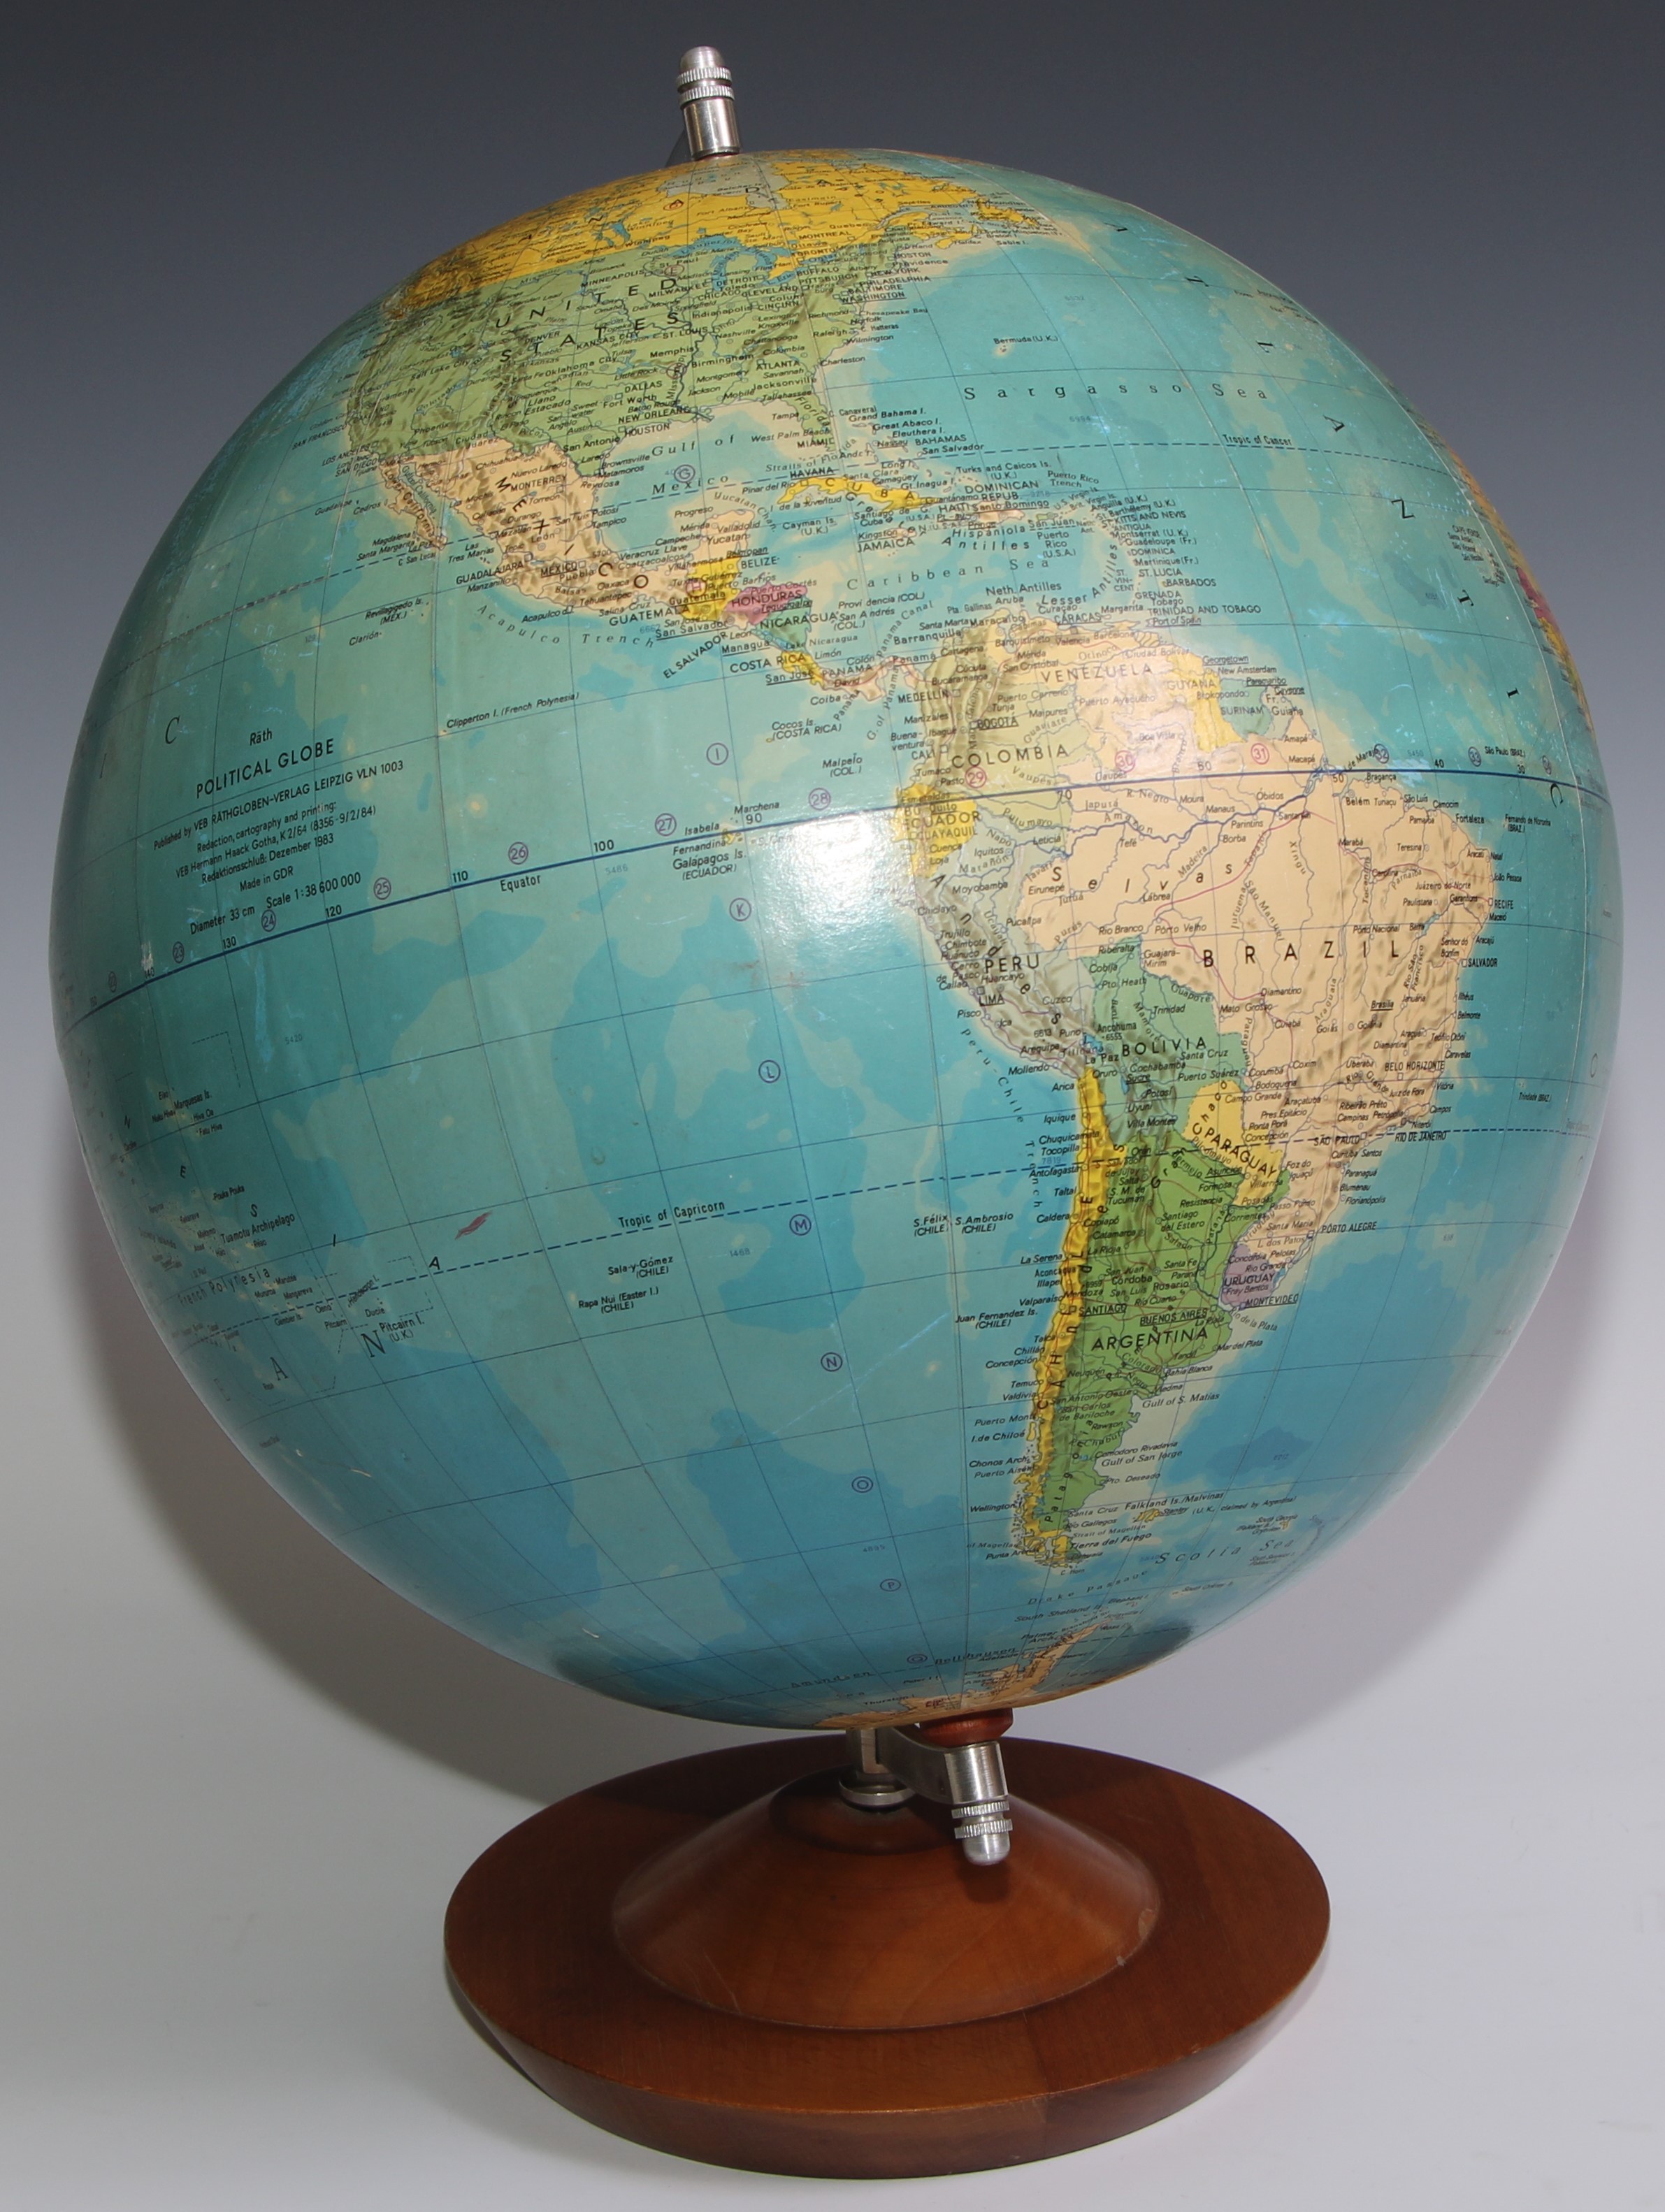 A terrestrial globe, Rath Political Globe, published by VEB Rathgloben-Verlag, Leipzig, aluminium - Image 2 of 3